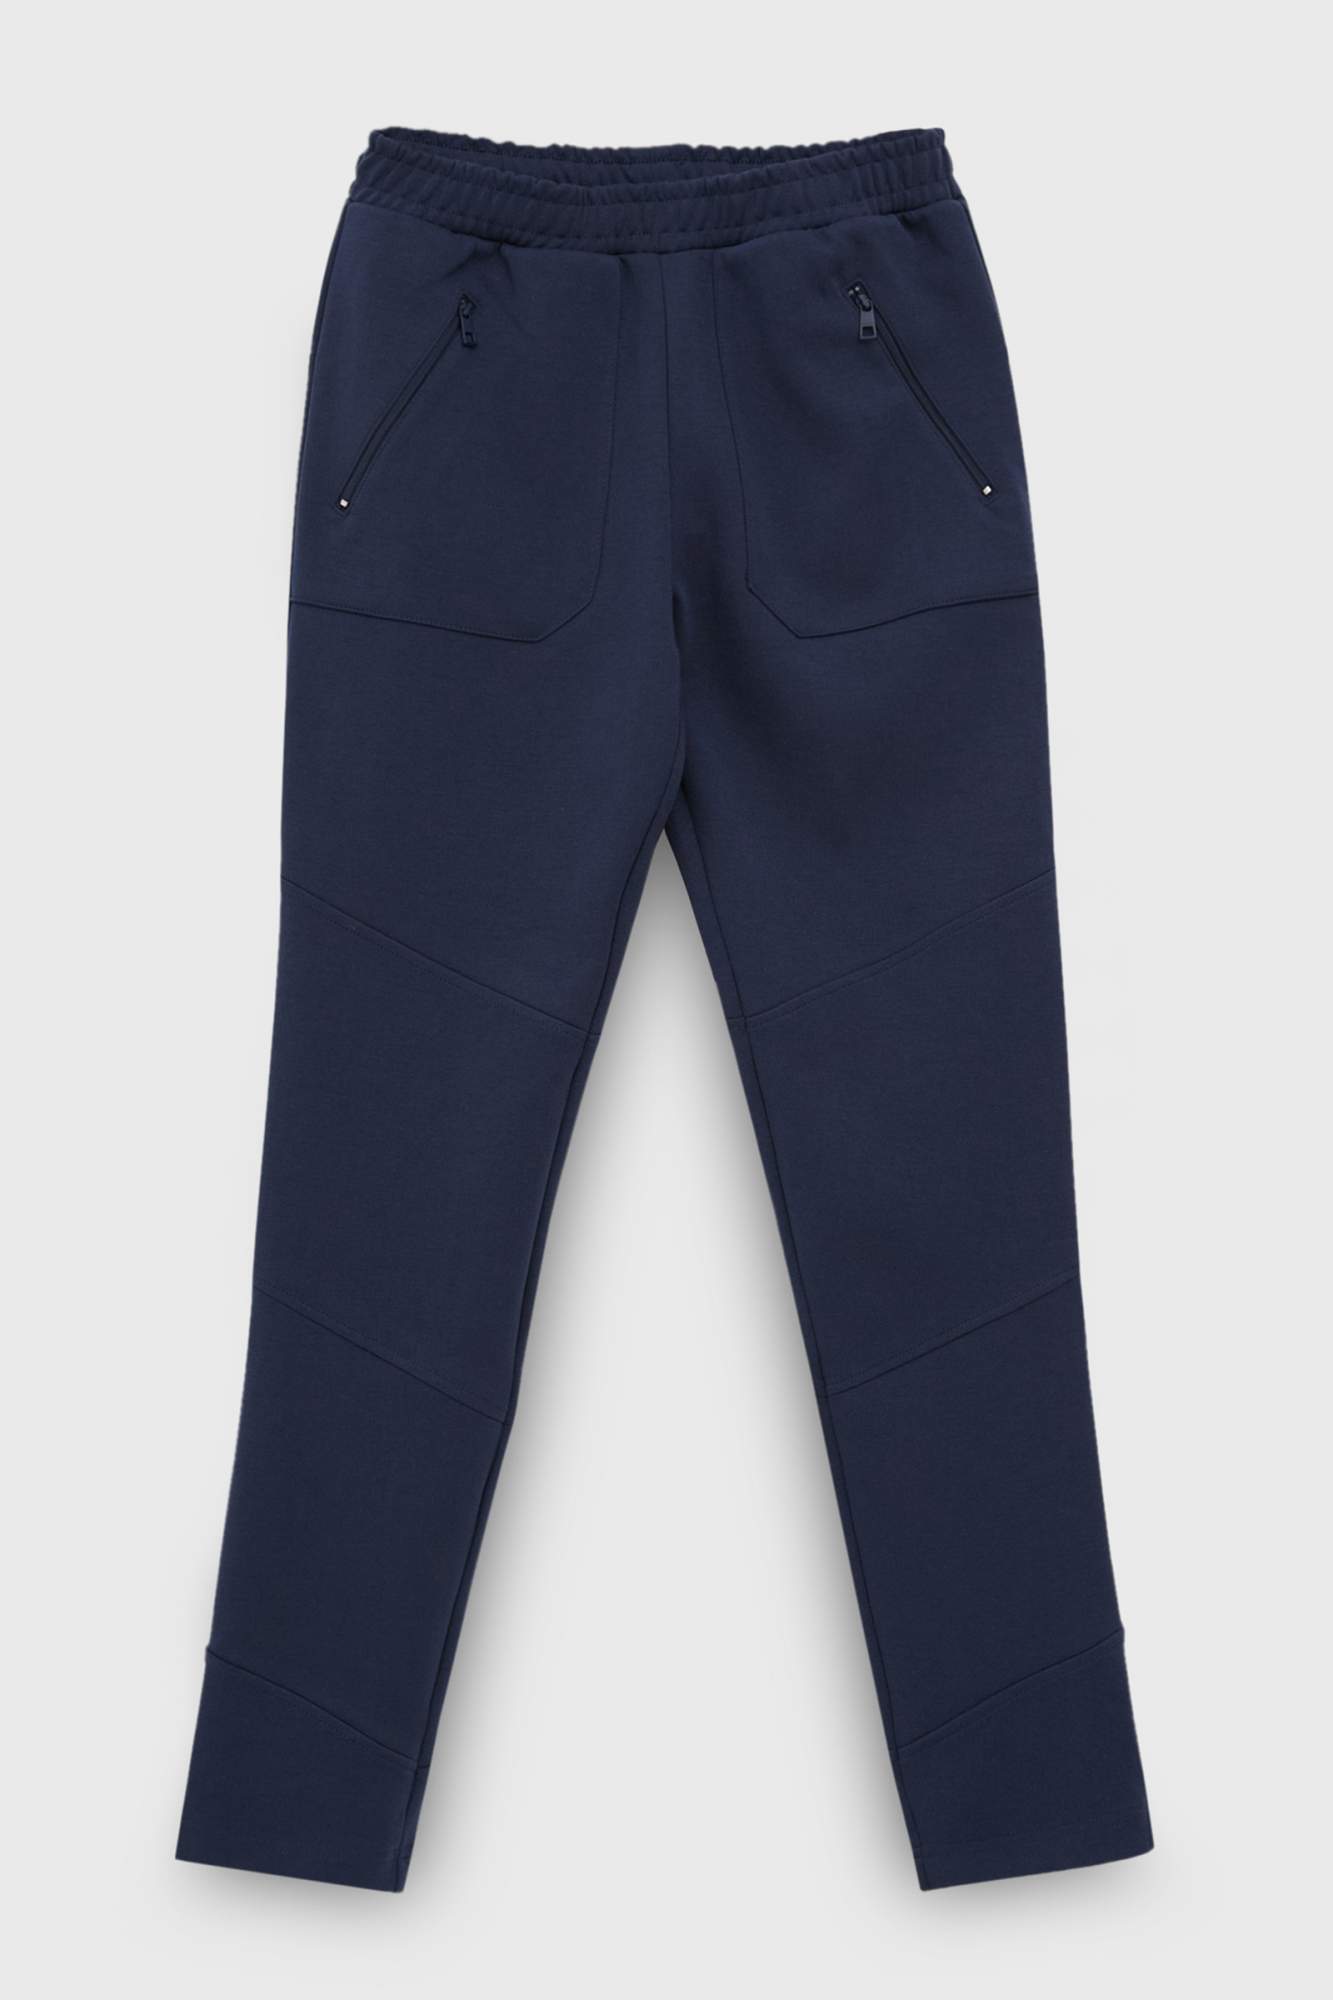 Спортивные брюки женские Finn Flare FBC13075 синие S